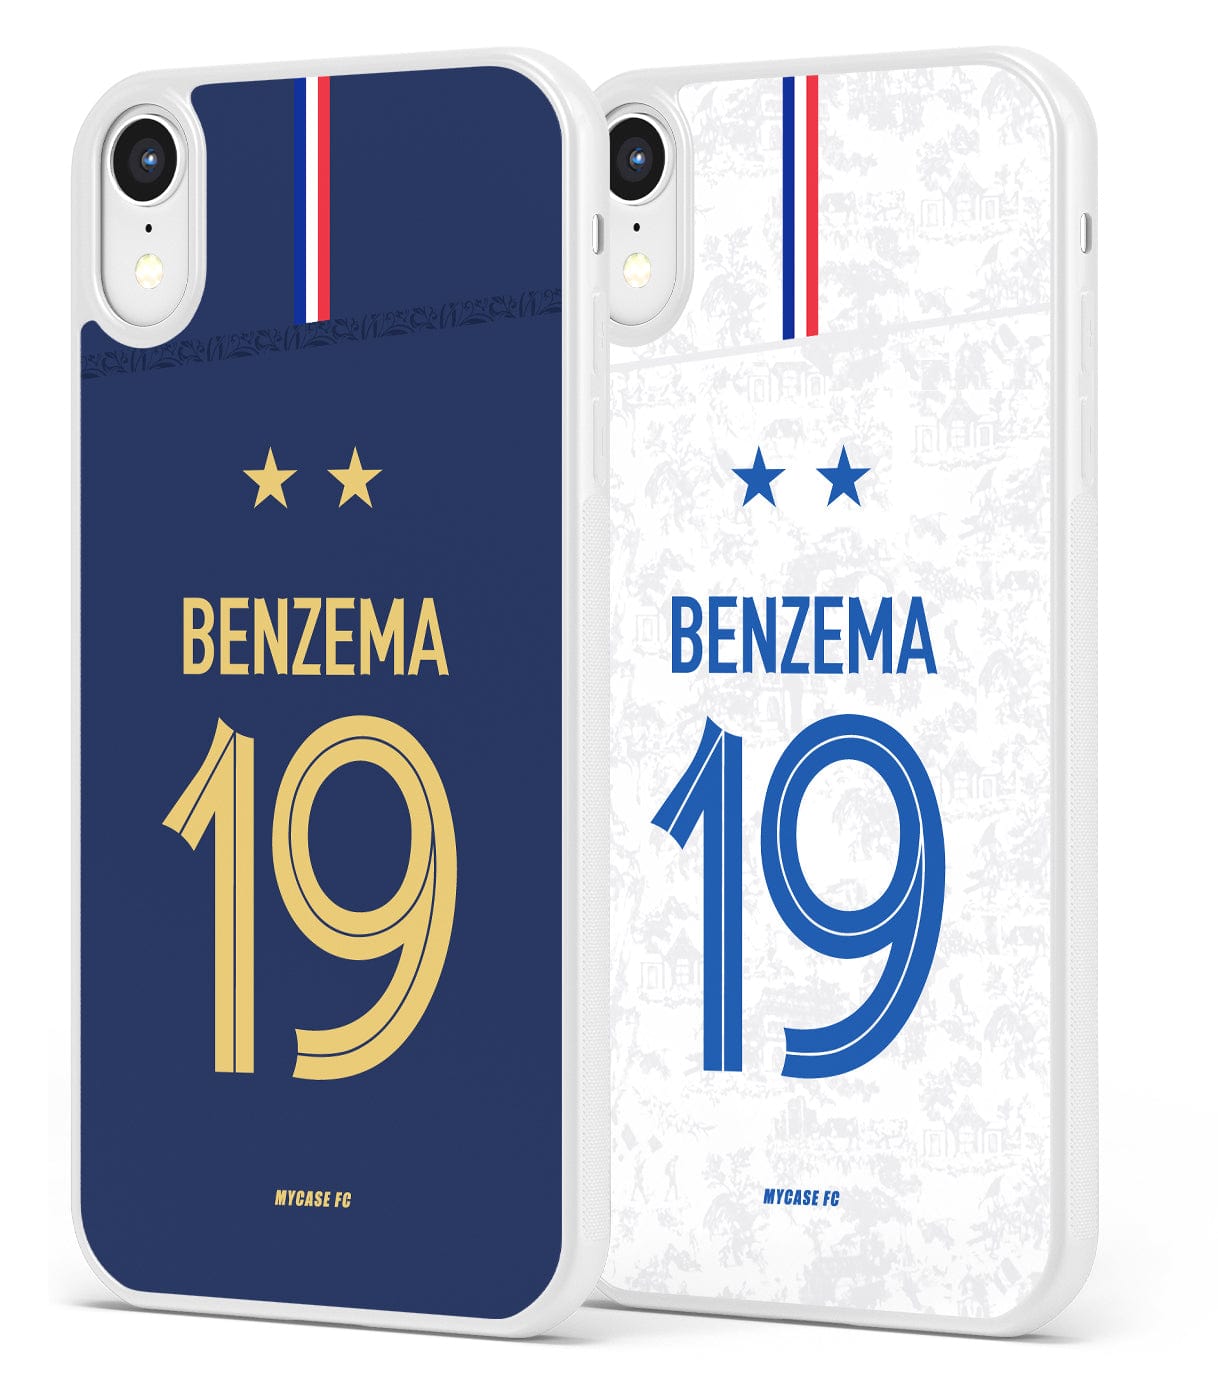 FRANCE - BENZEMA - MYCASE FC